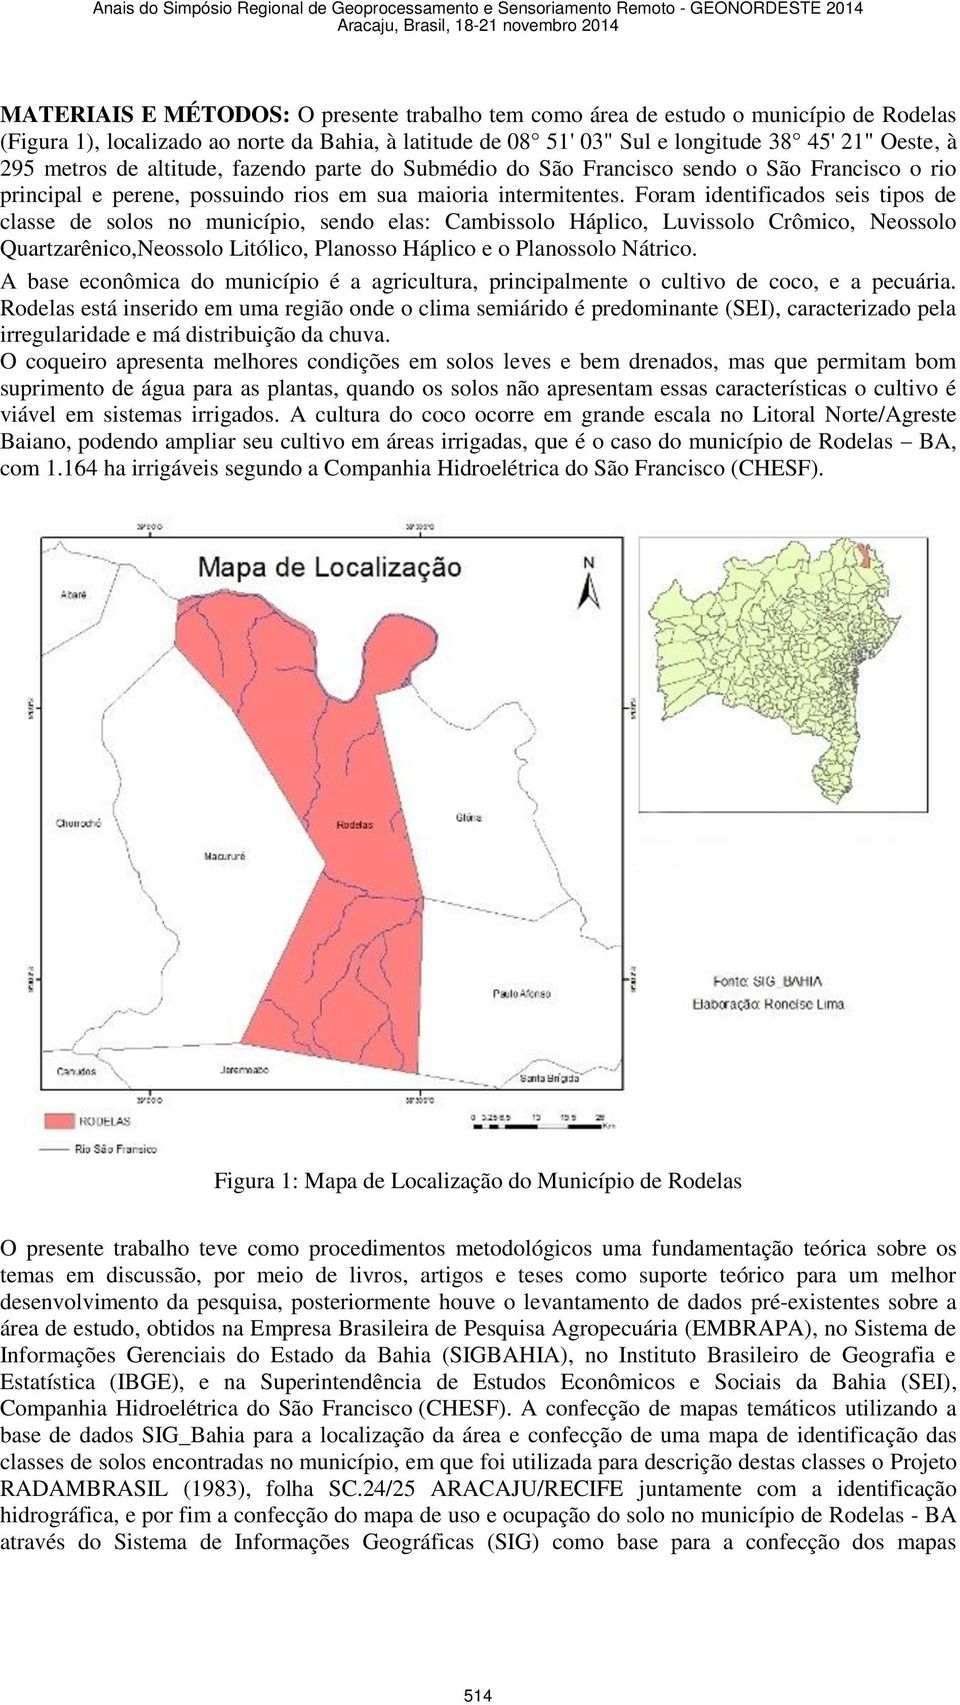 Foram identificados seis tipos de classe de solos no município, sendo elas: Cambissolo Háplico, Luvissolo Crômico, Neossolo Quartzarênico,Neossolo Litólico, Planosso Háplico e o Planossolo Nátrico.